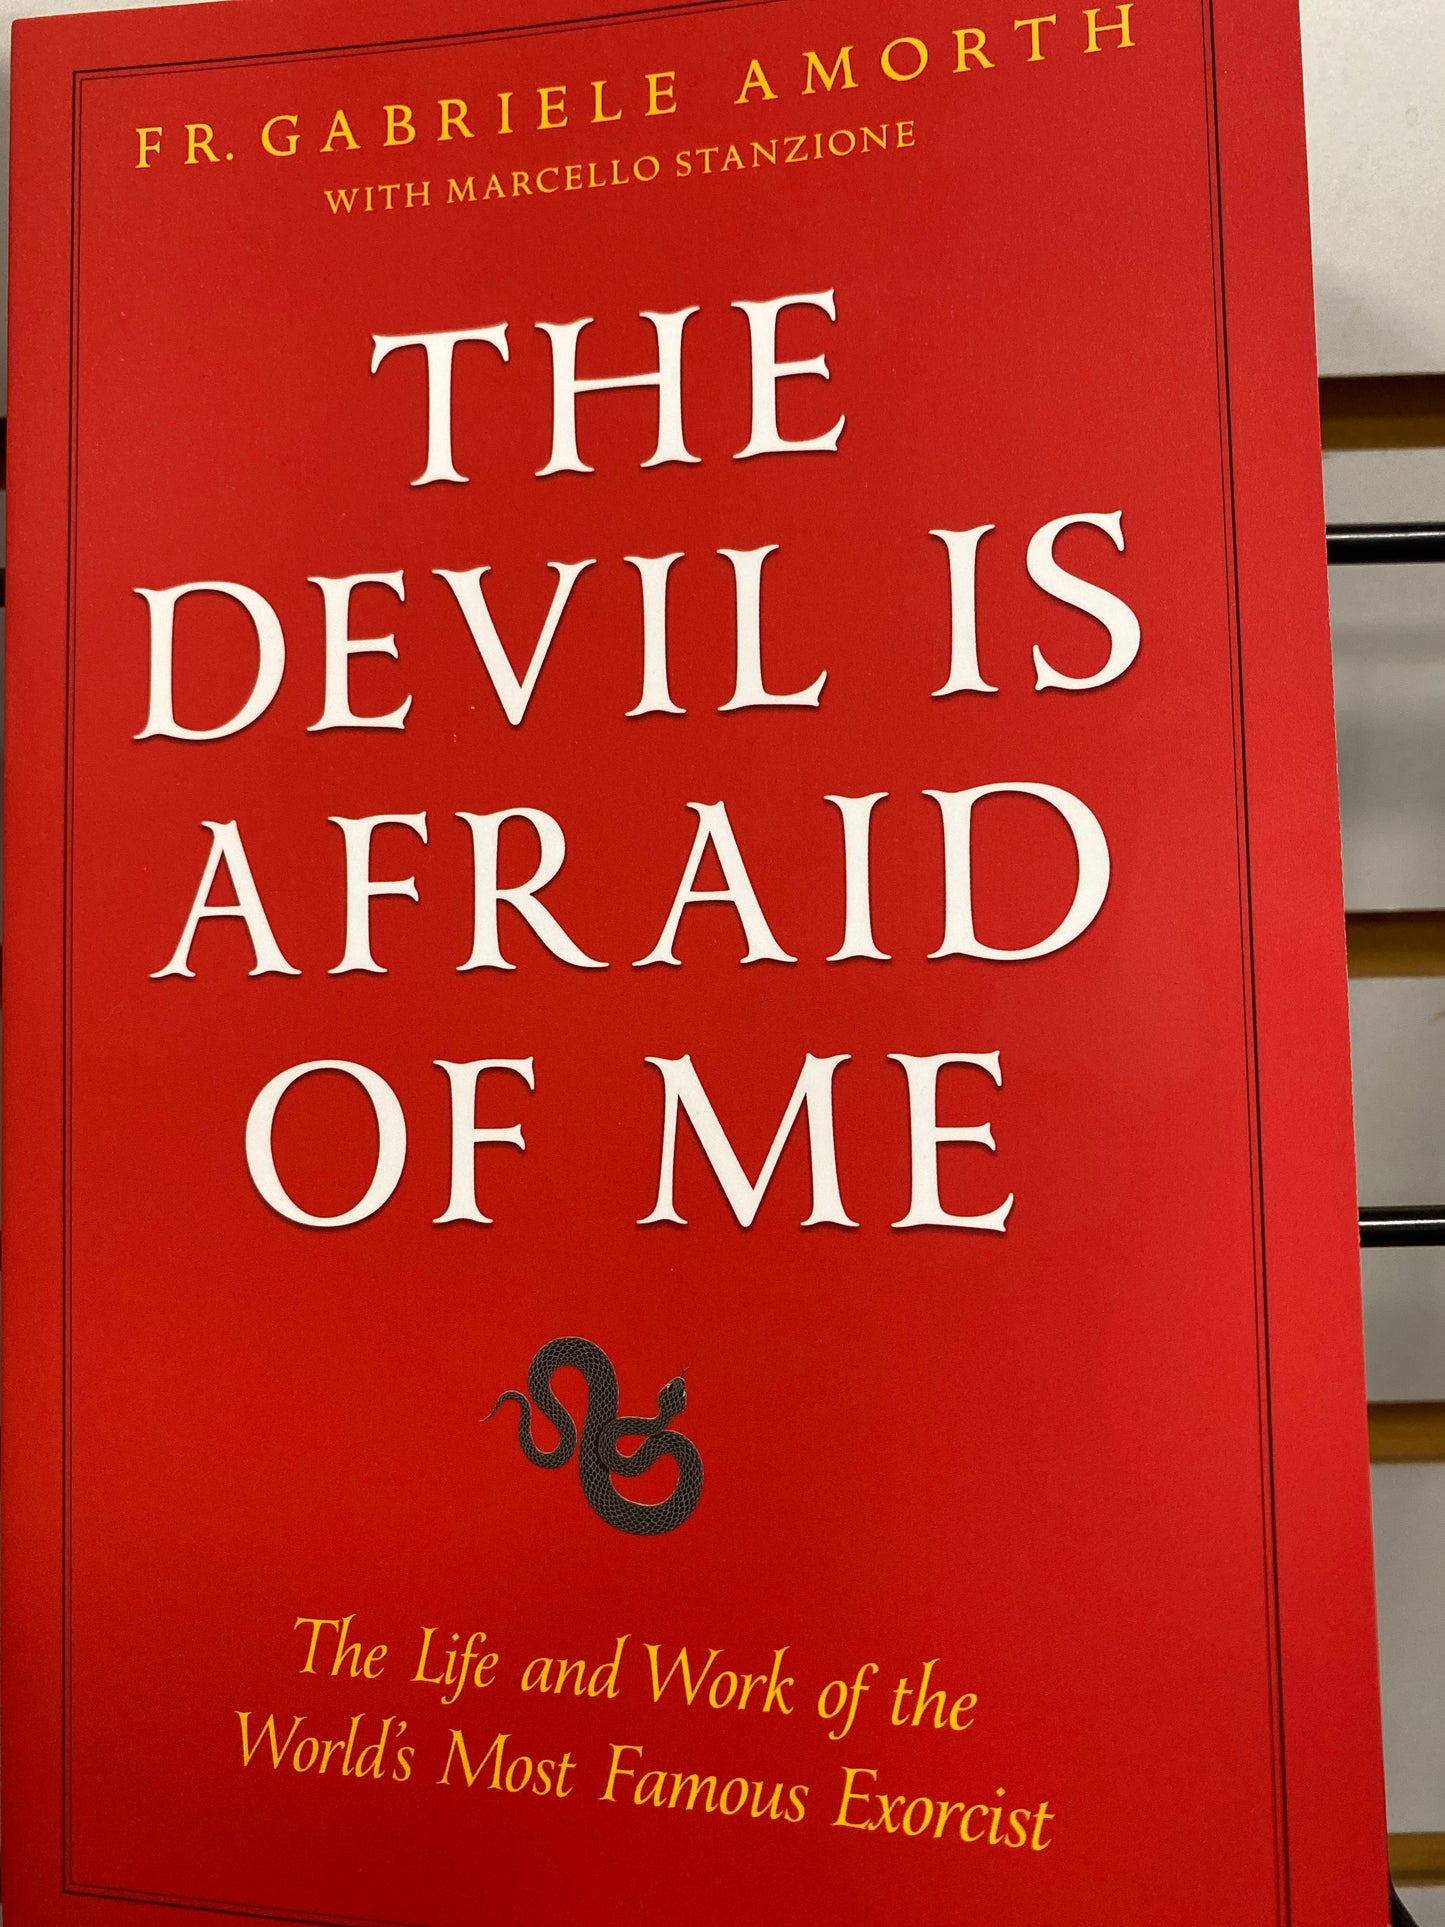 The Devil is Afraid of me